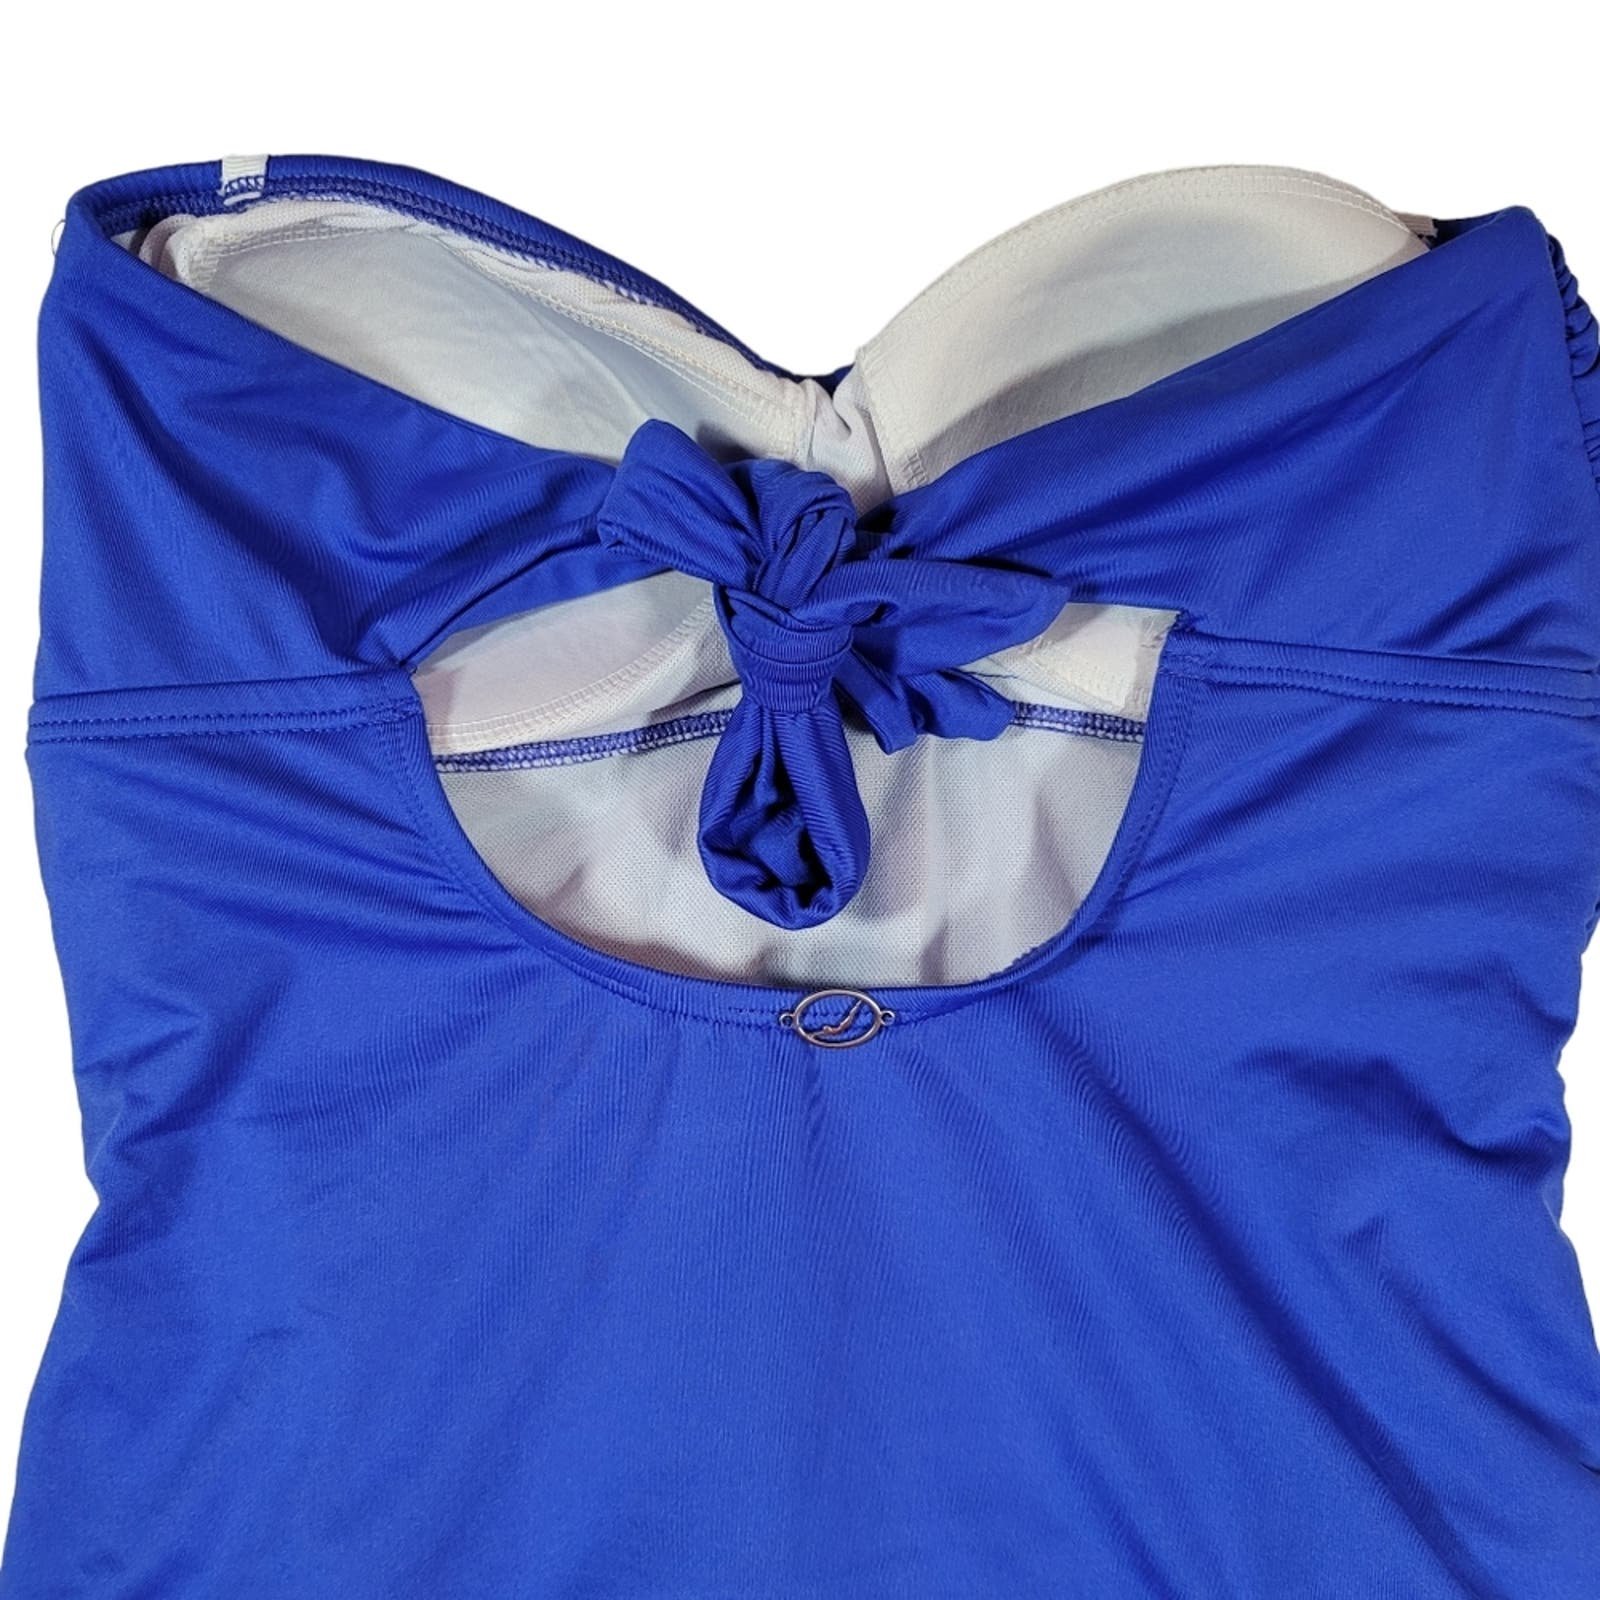 floor price Jantzen One Piece Blue Twist Top Sleeveless Swimdress Bathing Suit sz 12 I8Mfzq6tL Wholesale